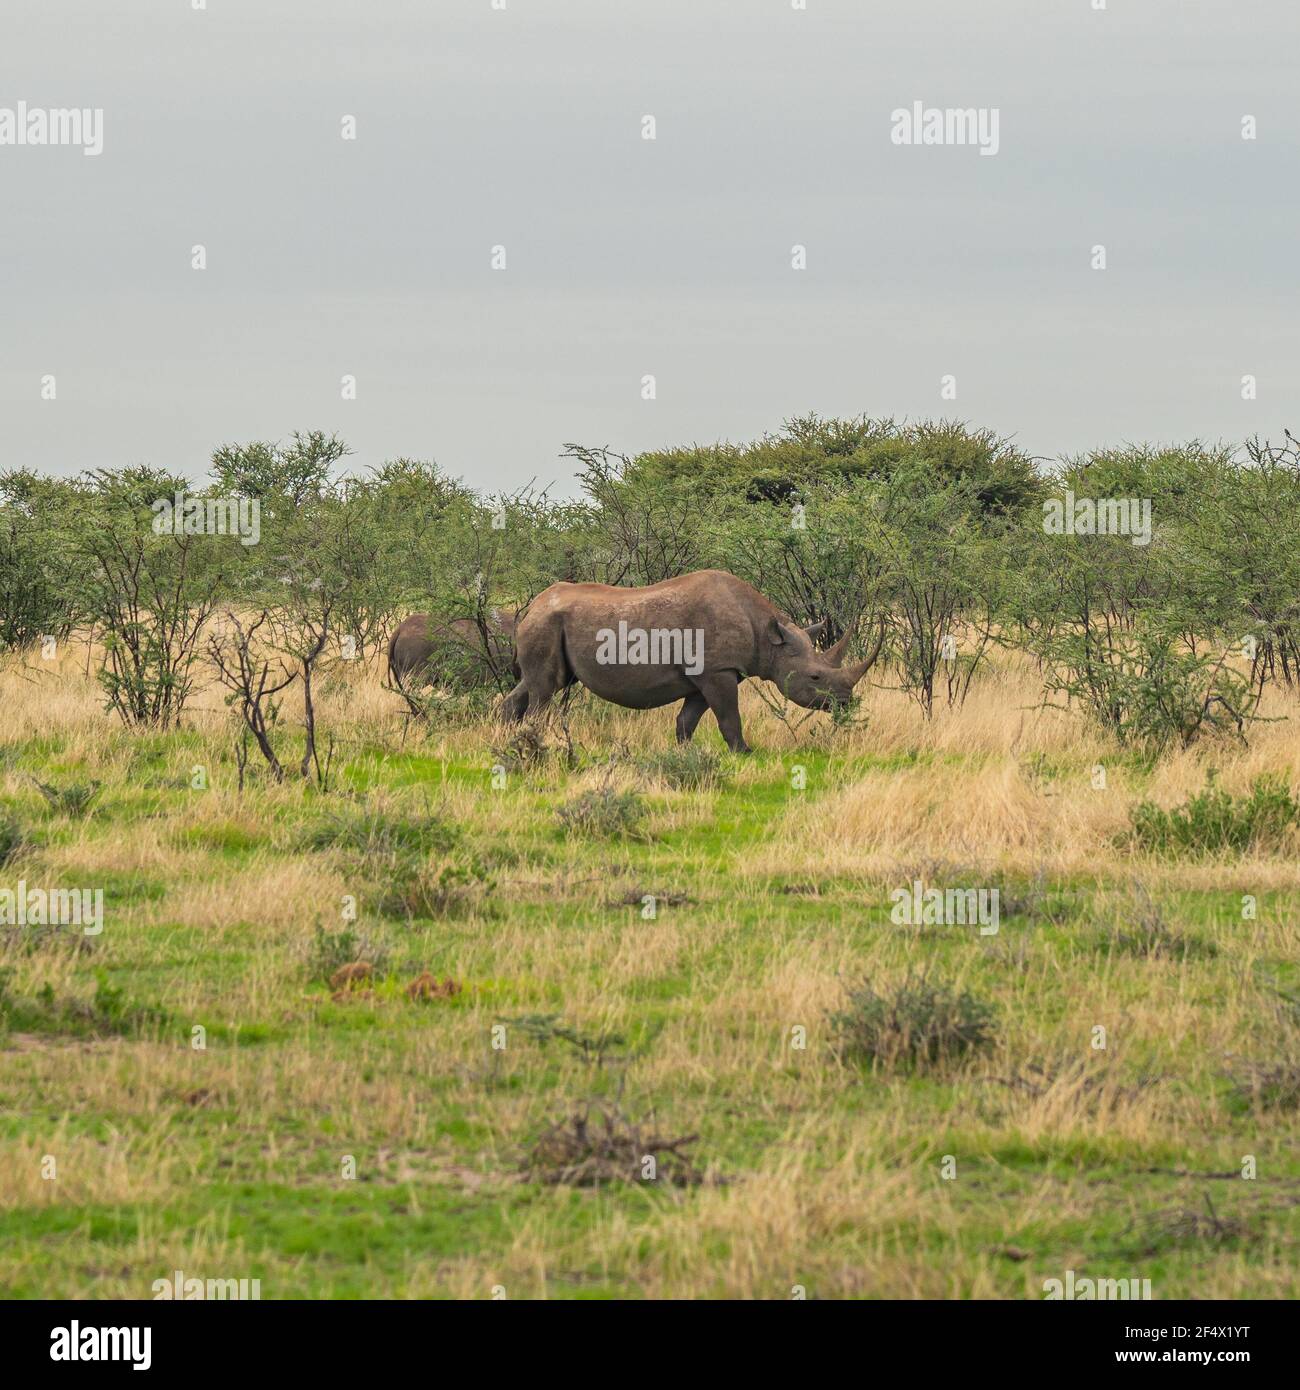 A black female rhino with here baby walking through bushes in Etosha National Park, Namibia Stock Photo